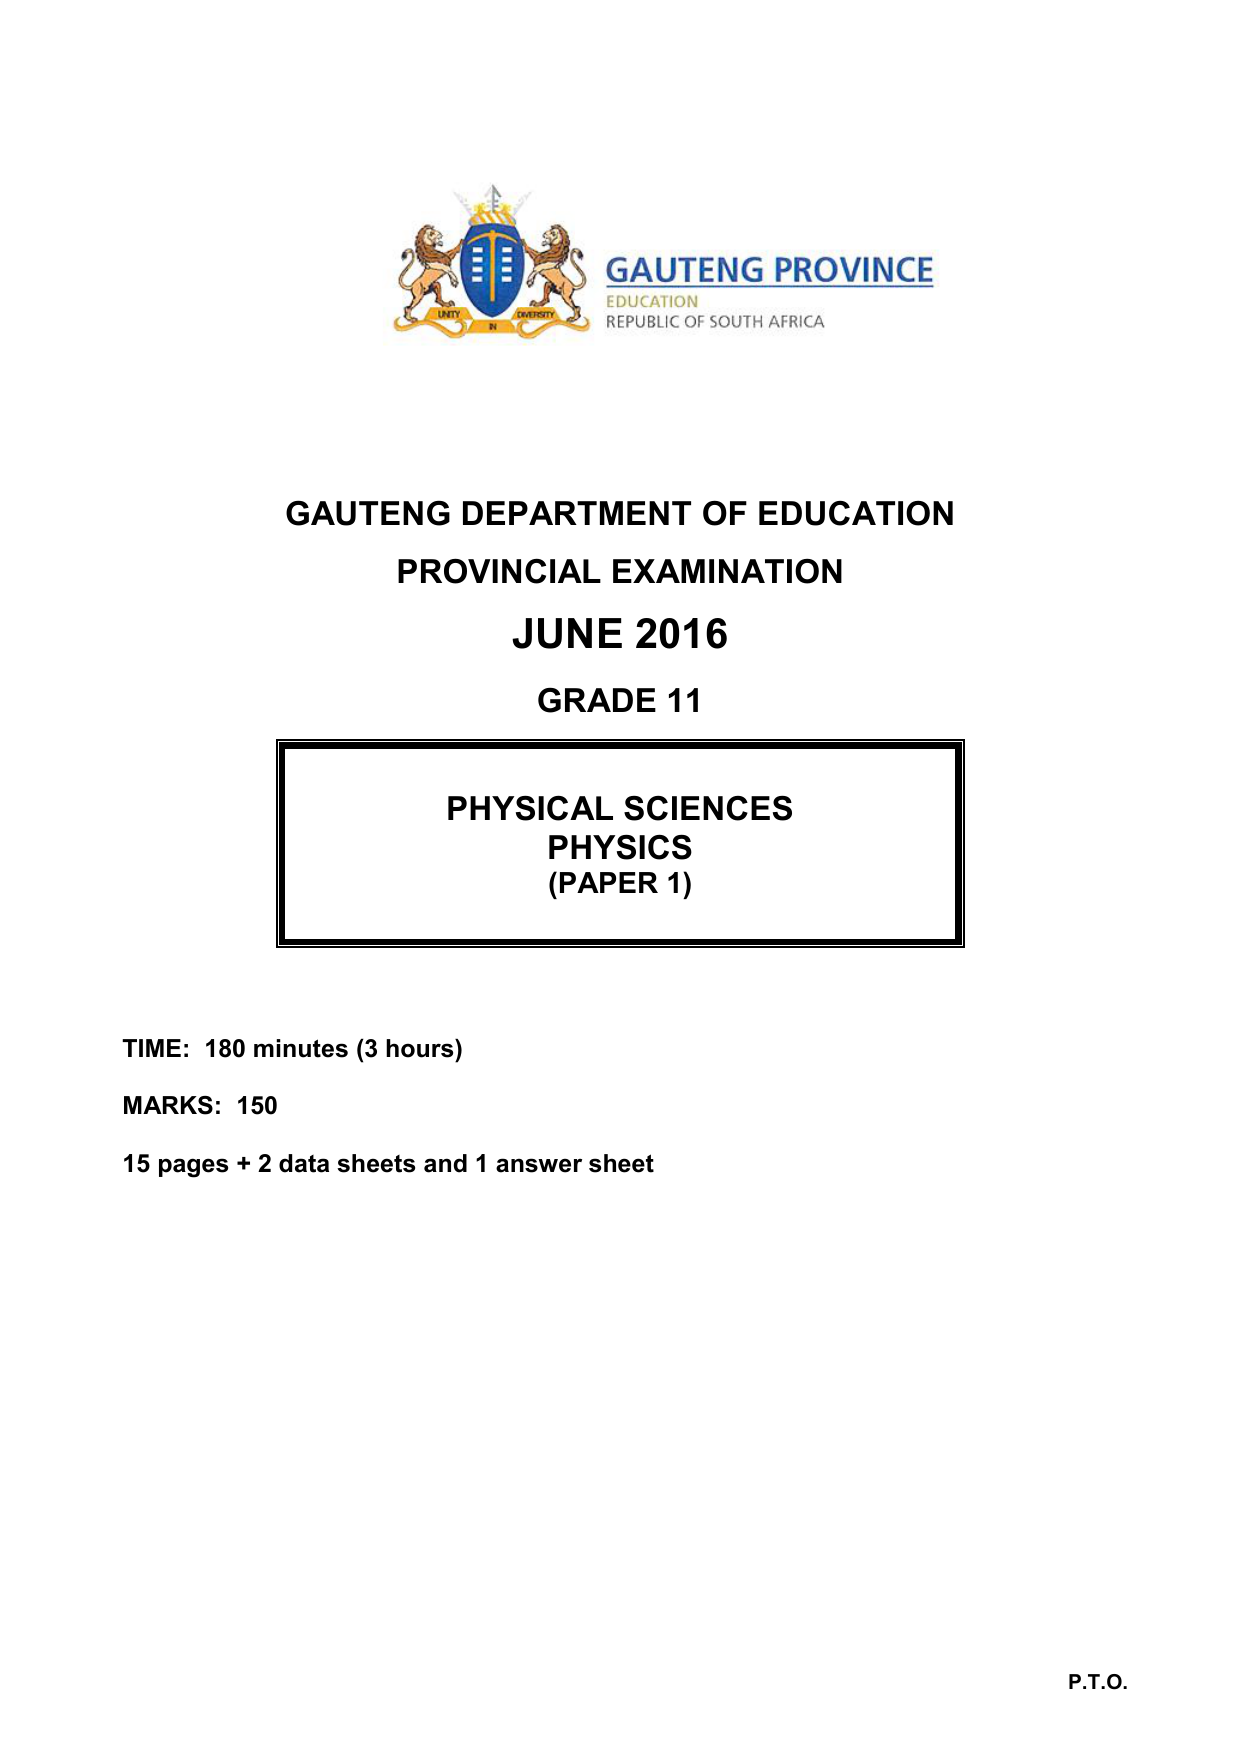 Bestseller Physical Sciences Paper 2 Gauteng Education